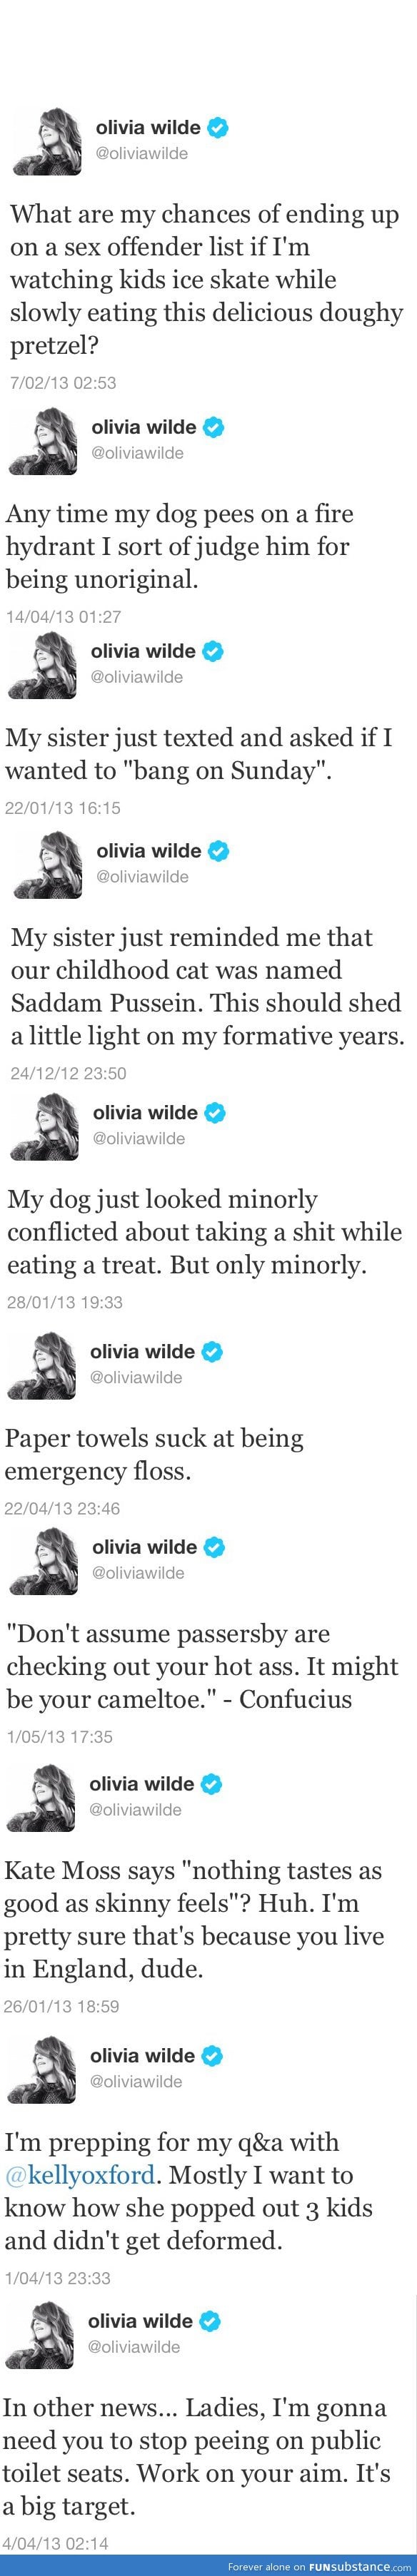 Olivia wilde tweets